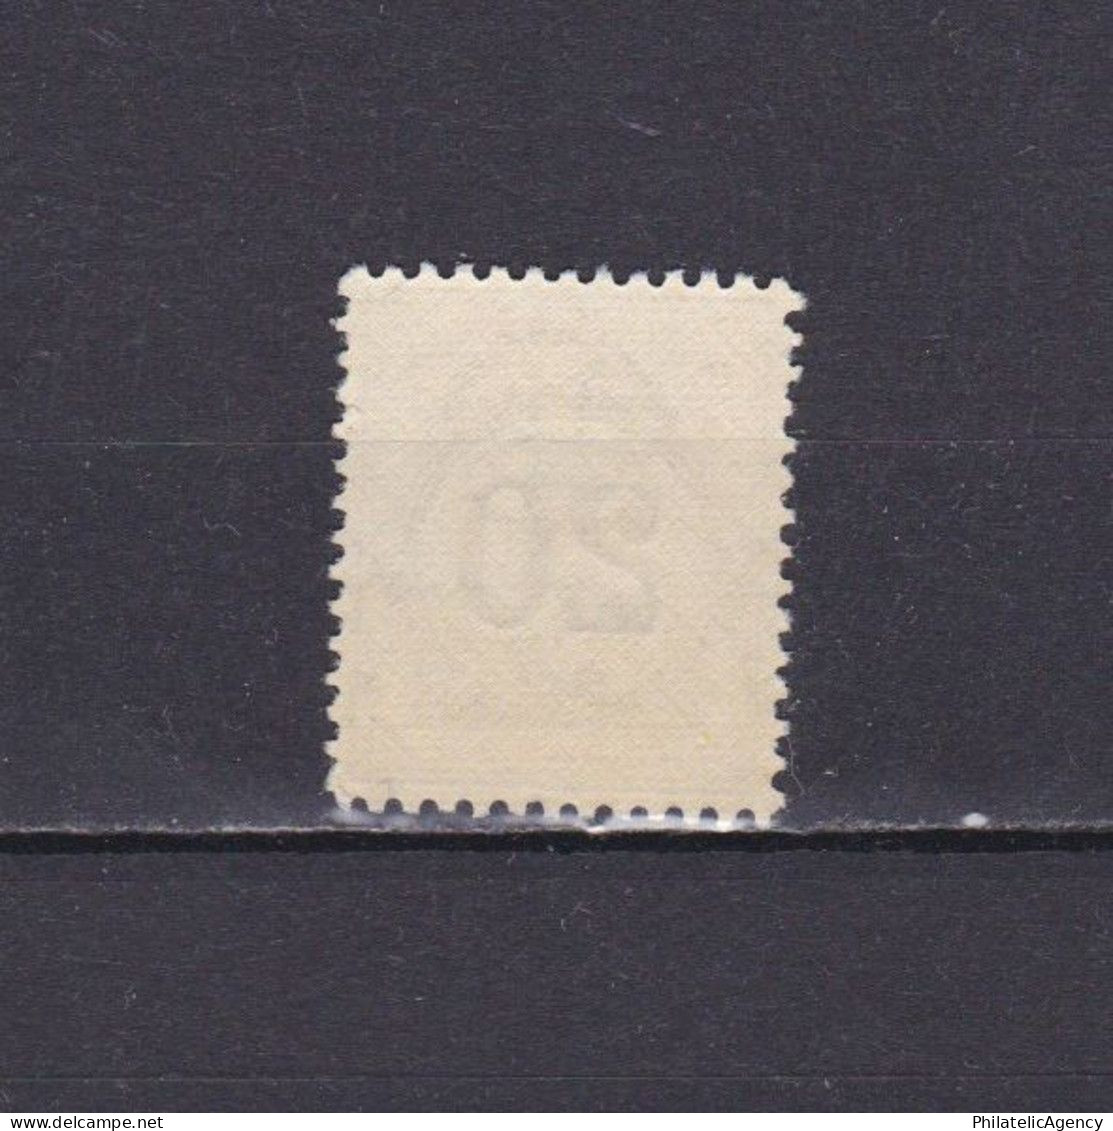 MALAYSIA 1945, SG #D21, Postage Due, Perf 12½, MH - Malayan Postal Union